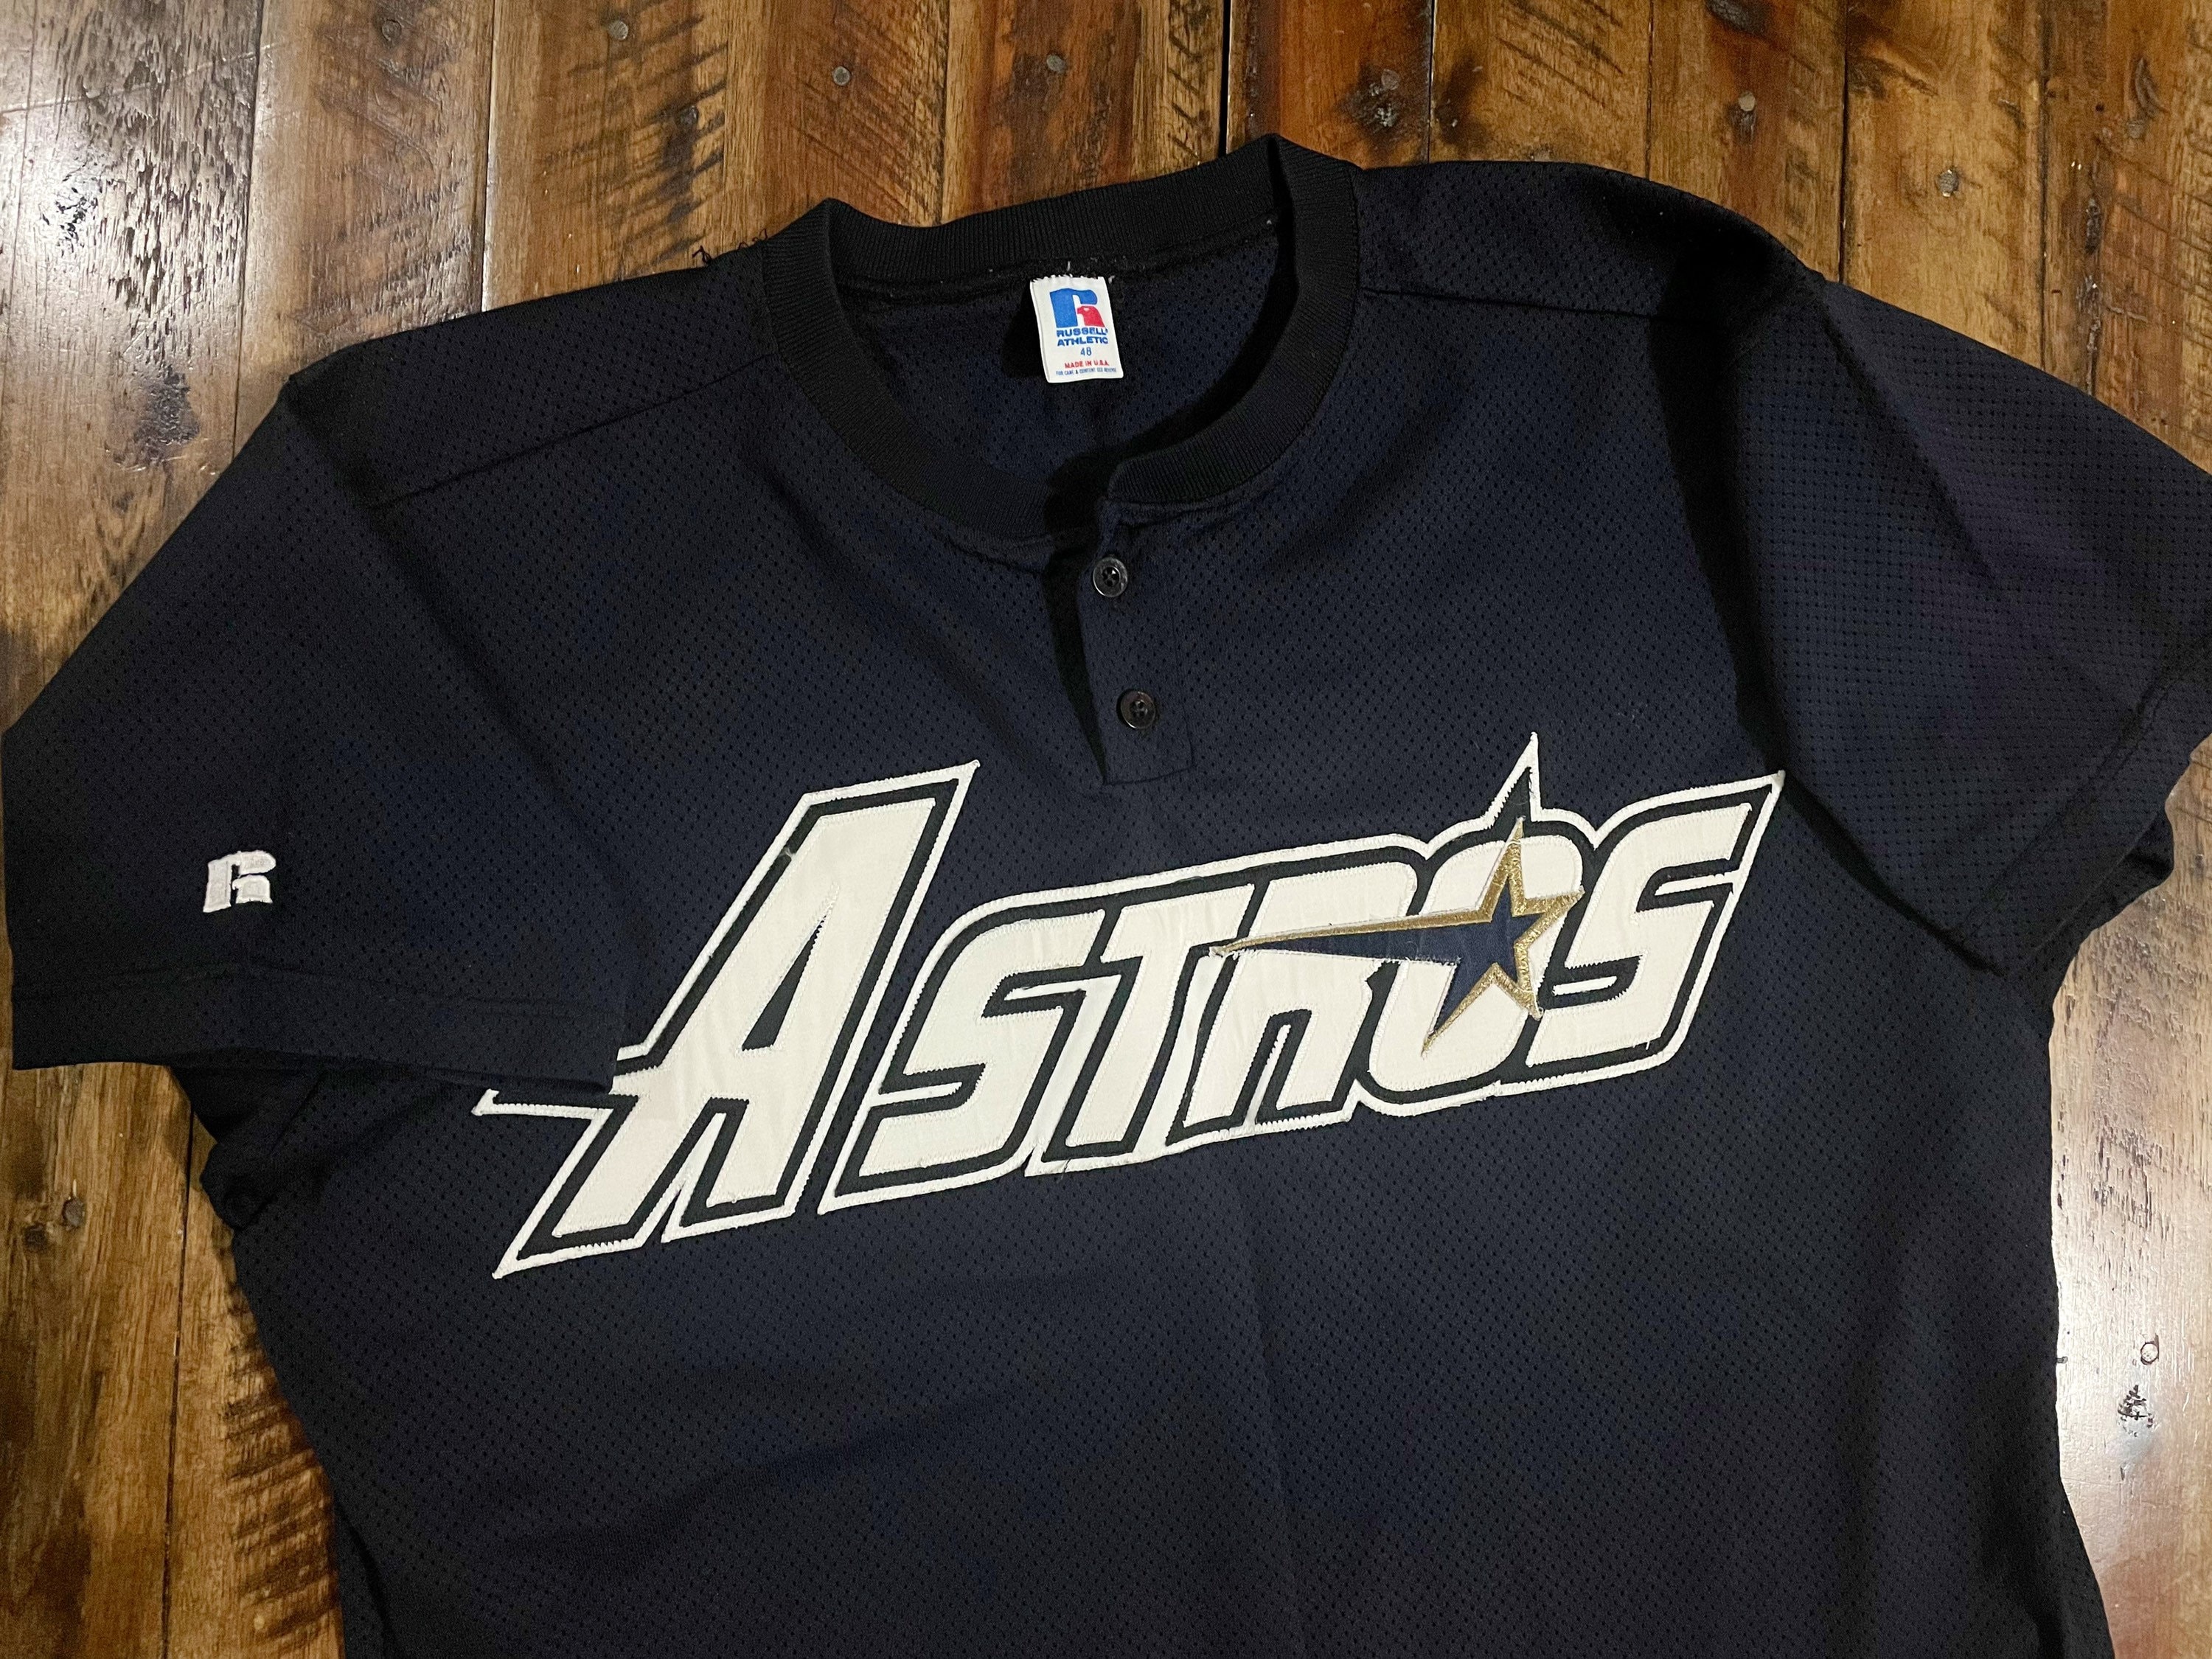 90's astros black jersey